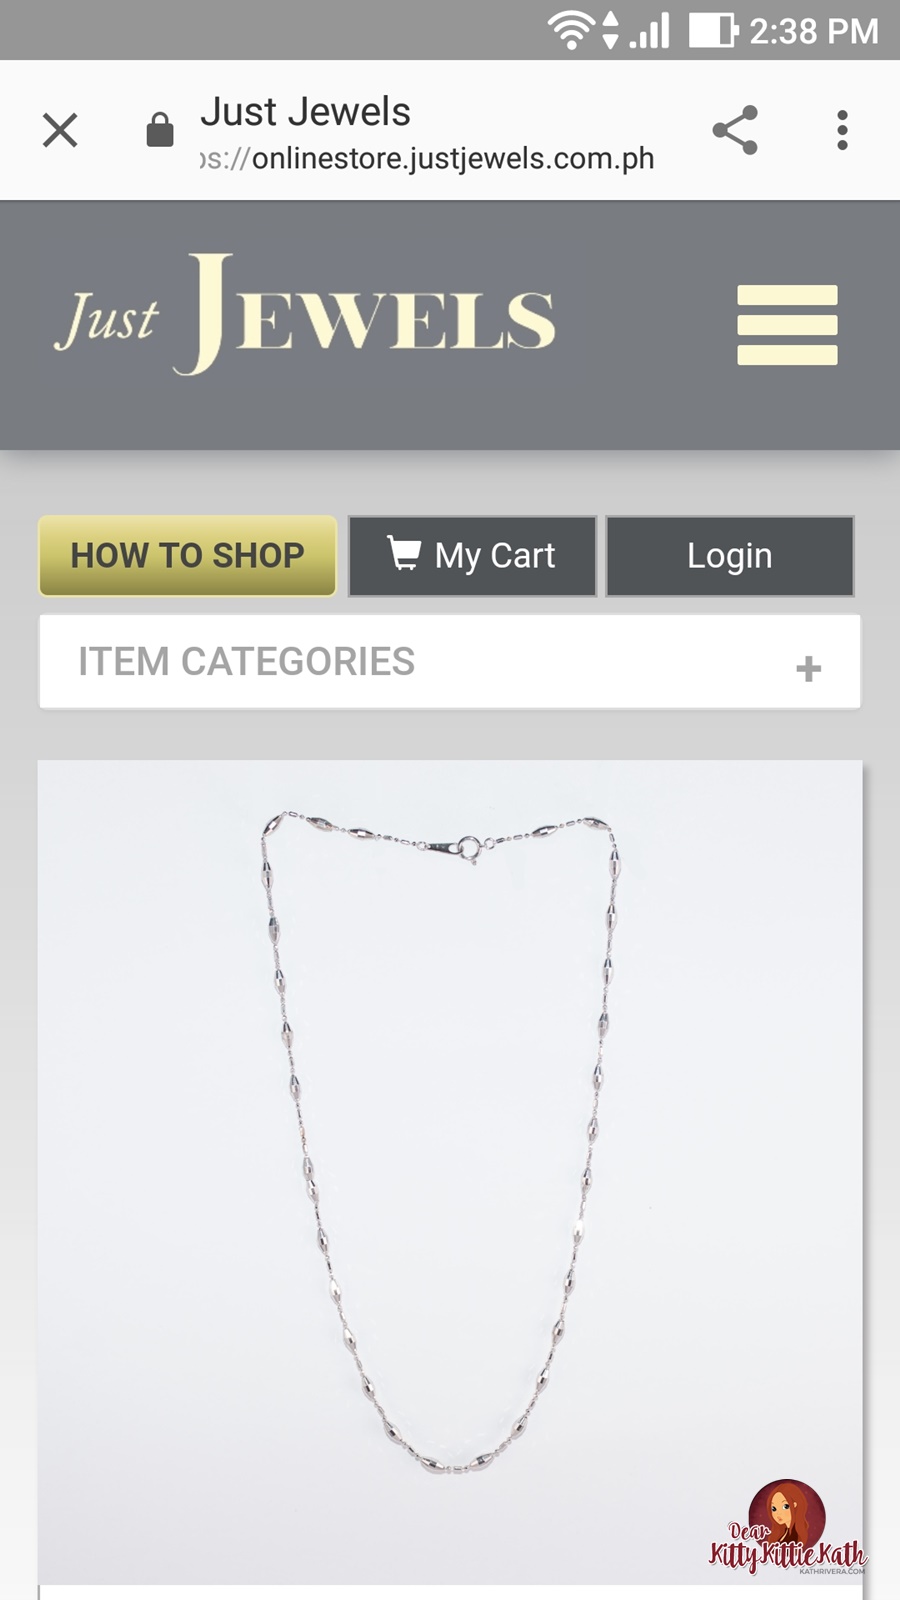 Just Jewels Online Store | Dear Kitty Kittie Kath- Top Lifestyle ...